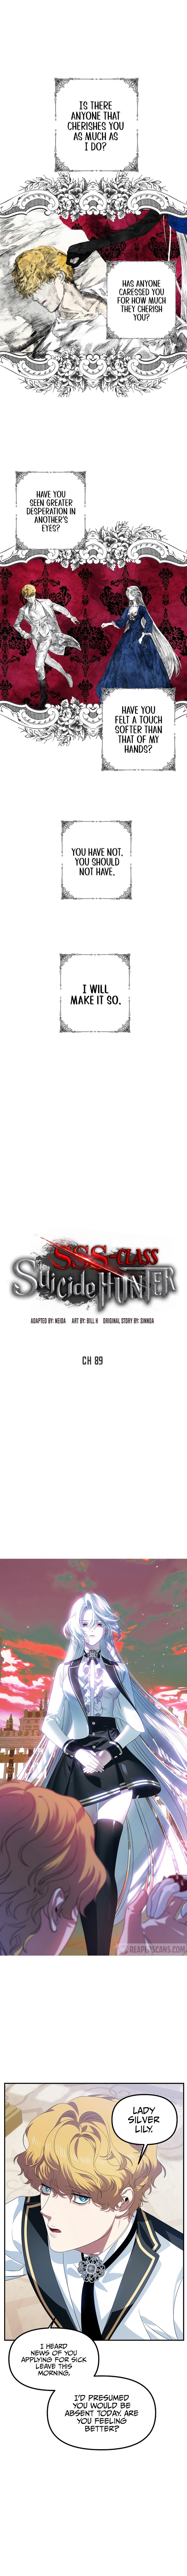 sss-class-suicide-hunter-chap-89-1